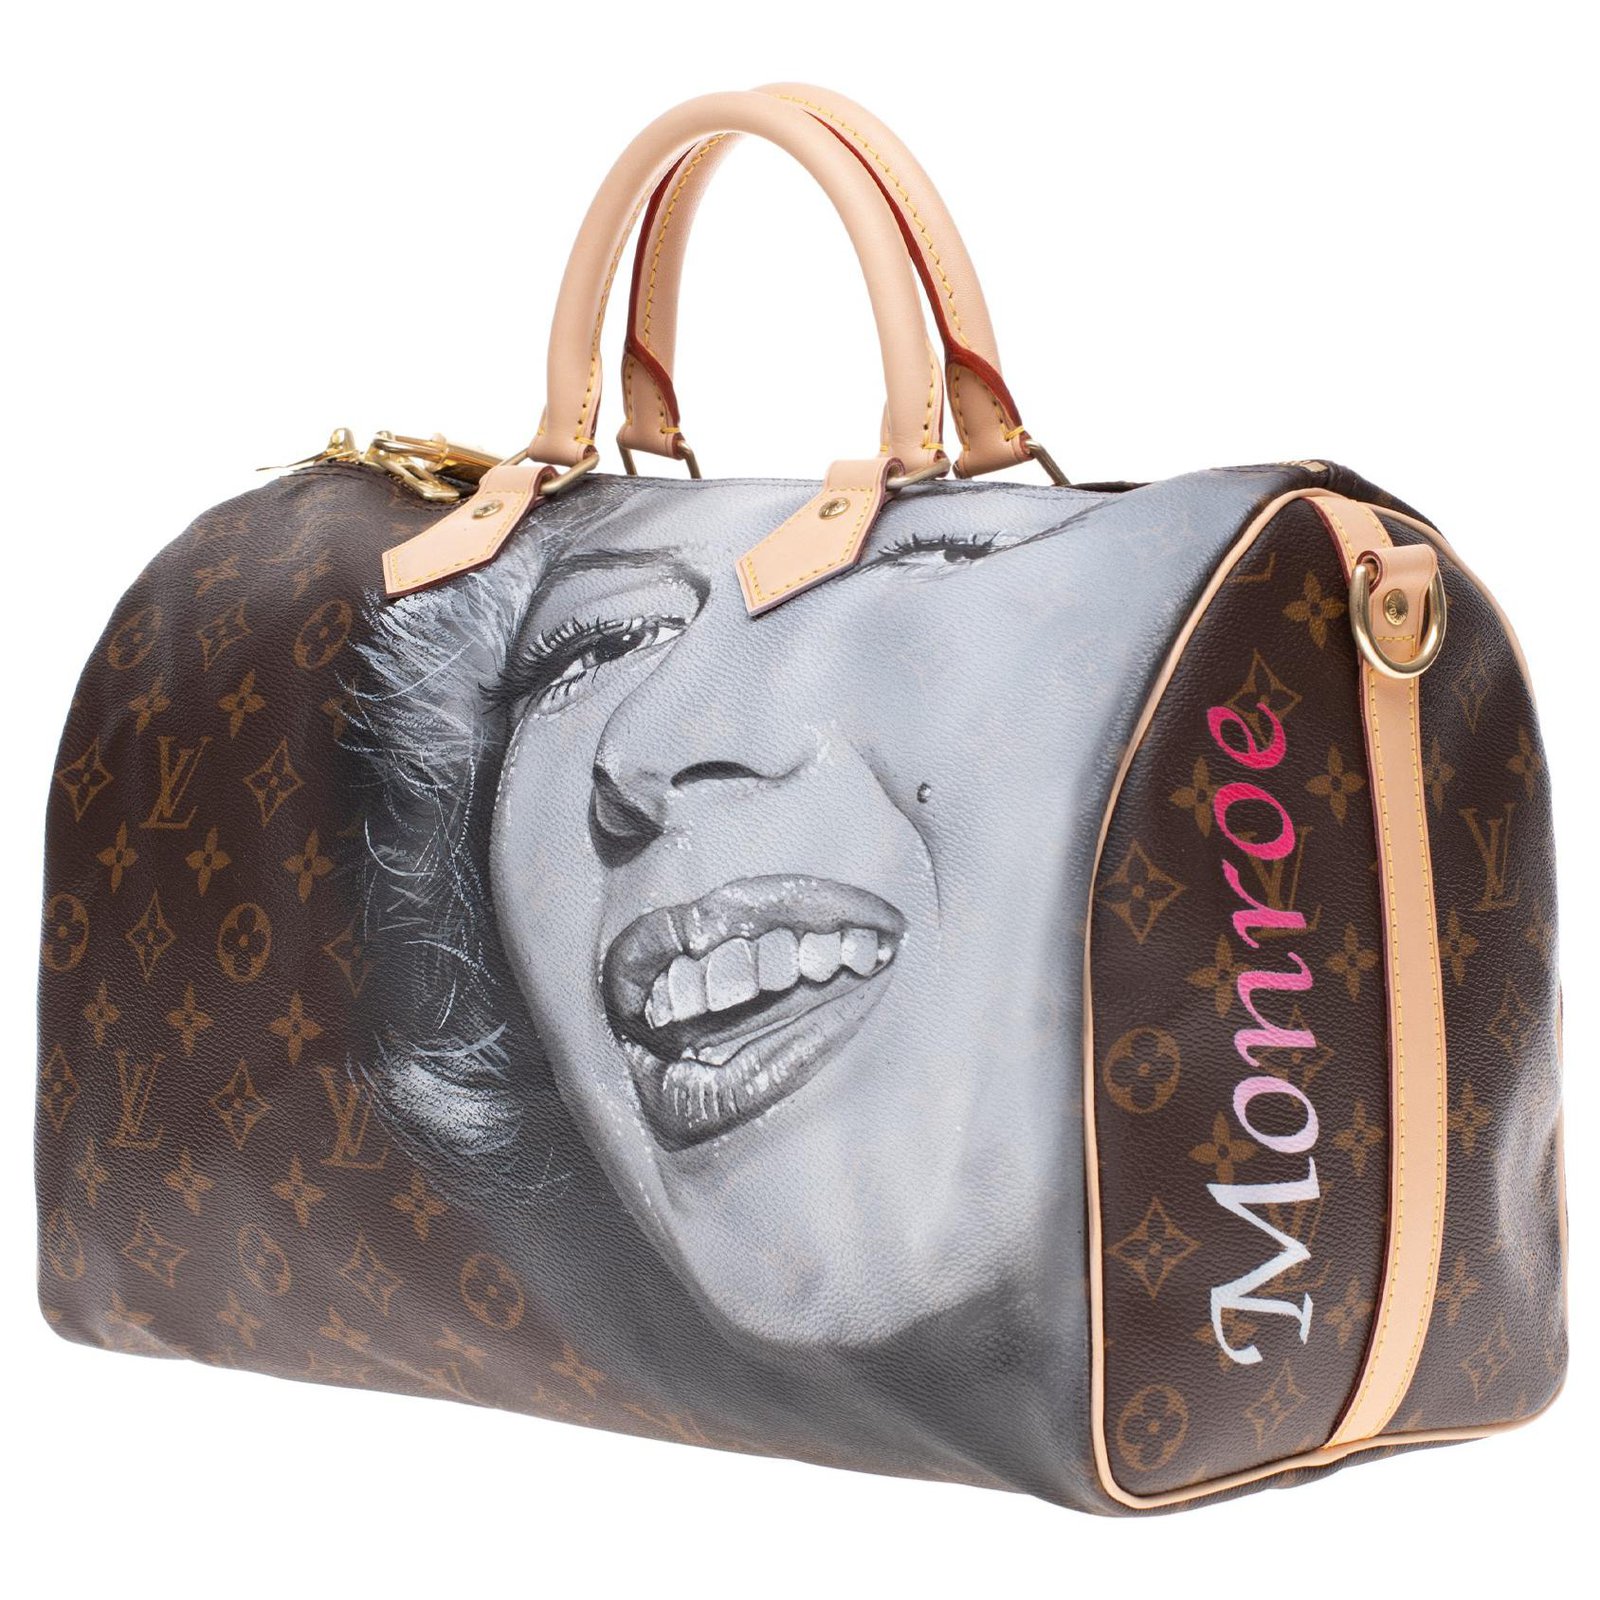 LV Speedy 35 shouderbag in Monogram canvas customized Marilyn